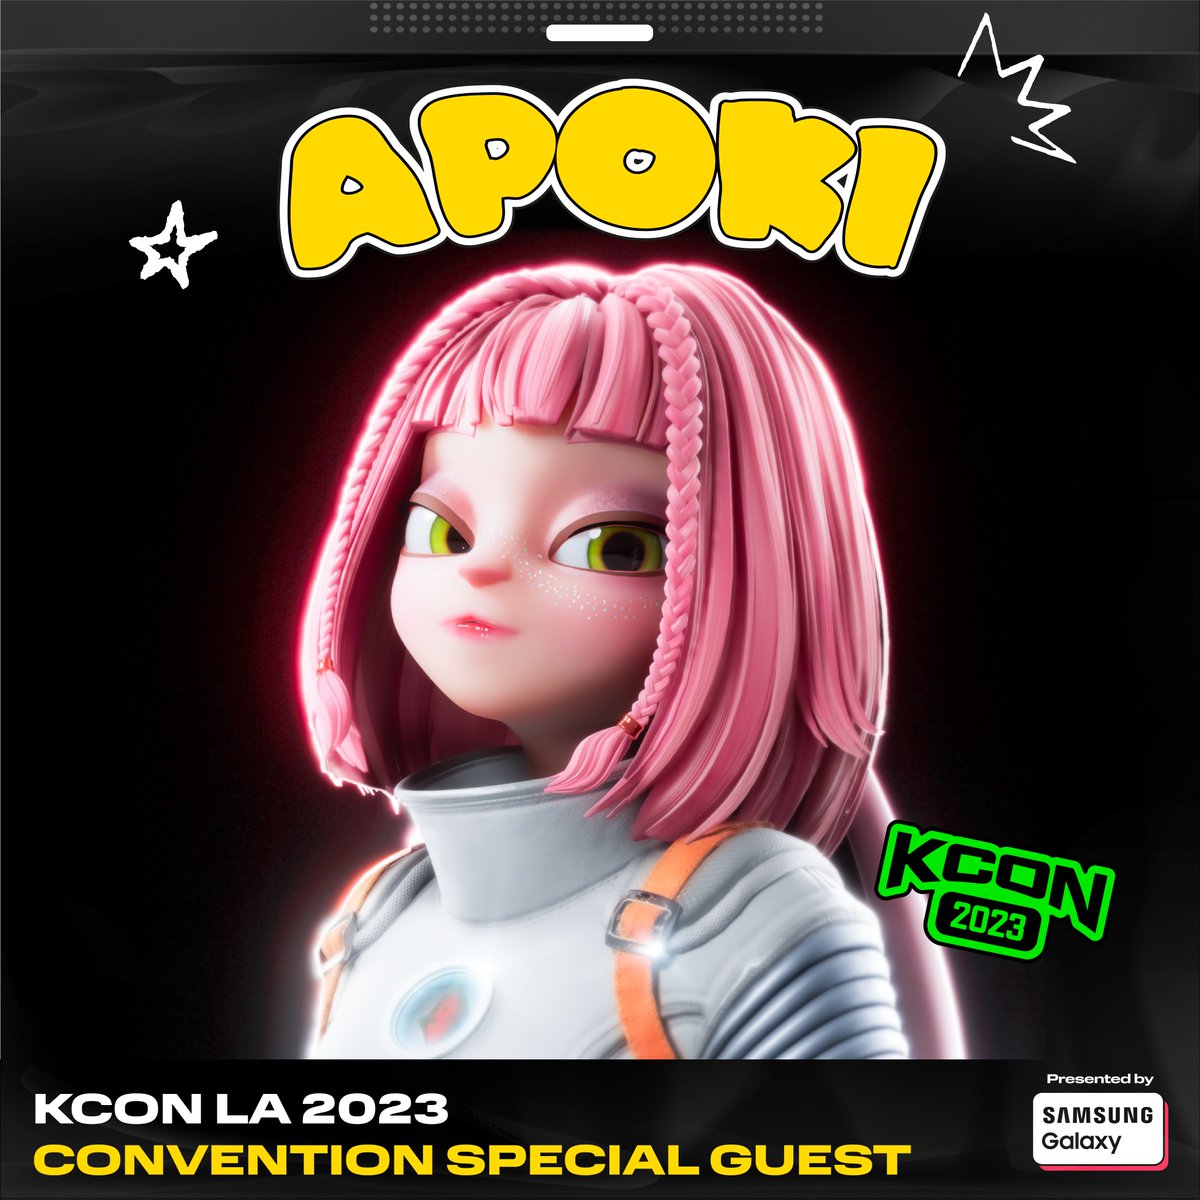 [#KCONLA2023]
CONVENTION SPECIAL GUEST ✨

VIRTUAL ARTIST @Apoki2
#apoki
#아뽀키

🎈
KCON LA 2023
8.18.~8.20.
Let’s #KCON!